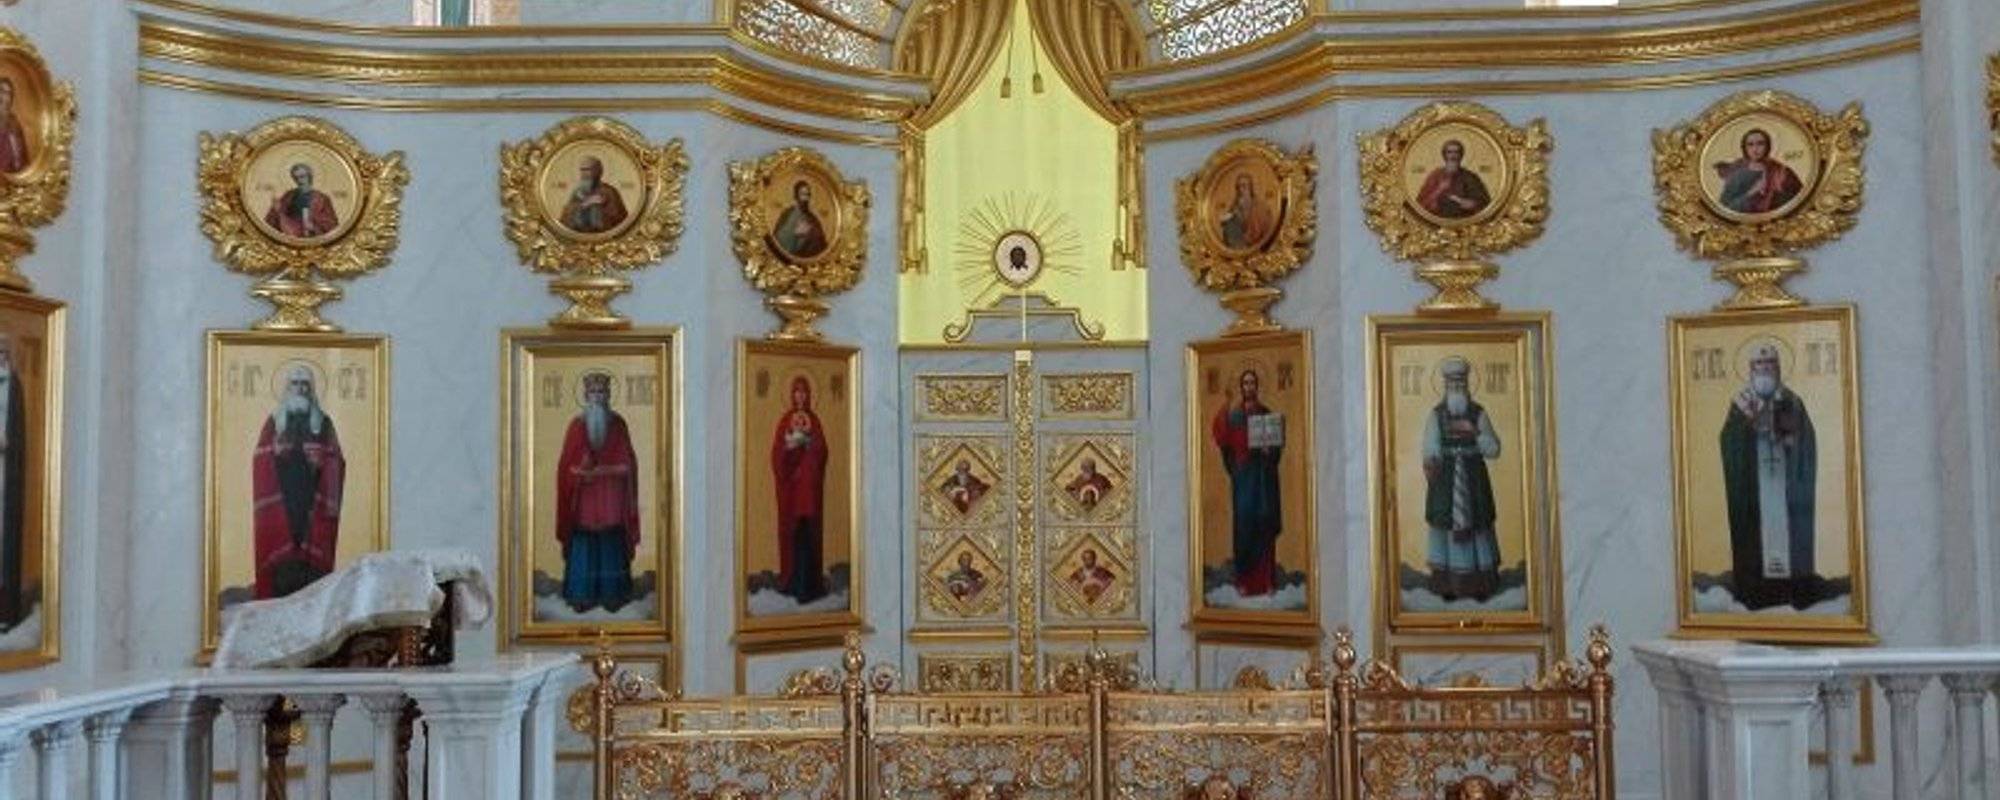 Travel Pro Places of Interest #74: Spaso-Preobrazhensky Cathedral in Odessa Ukraine! Part One (10 photos)